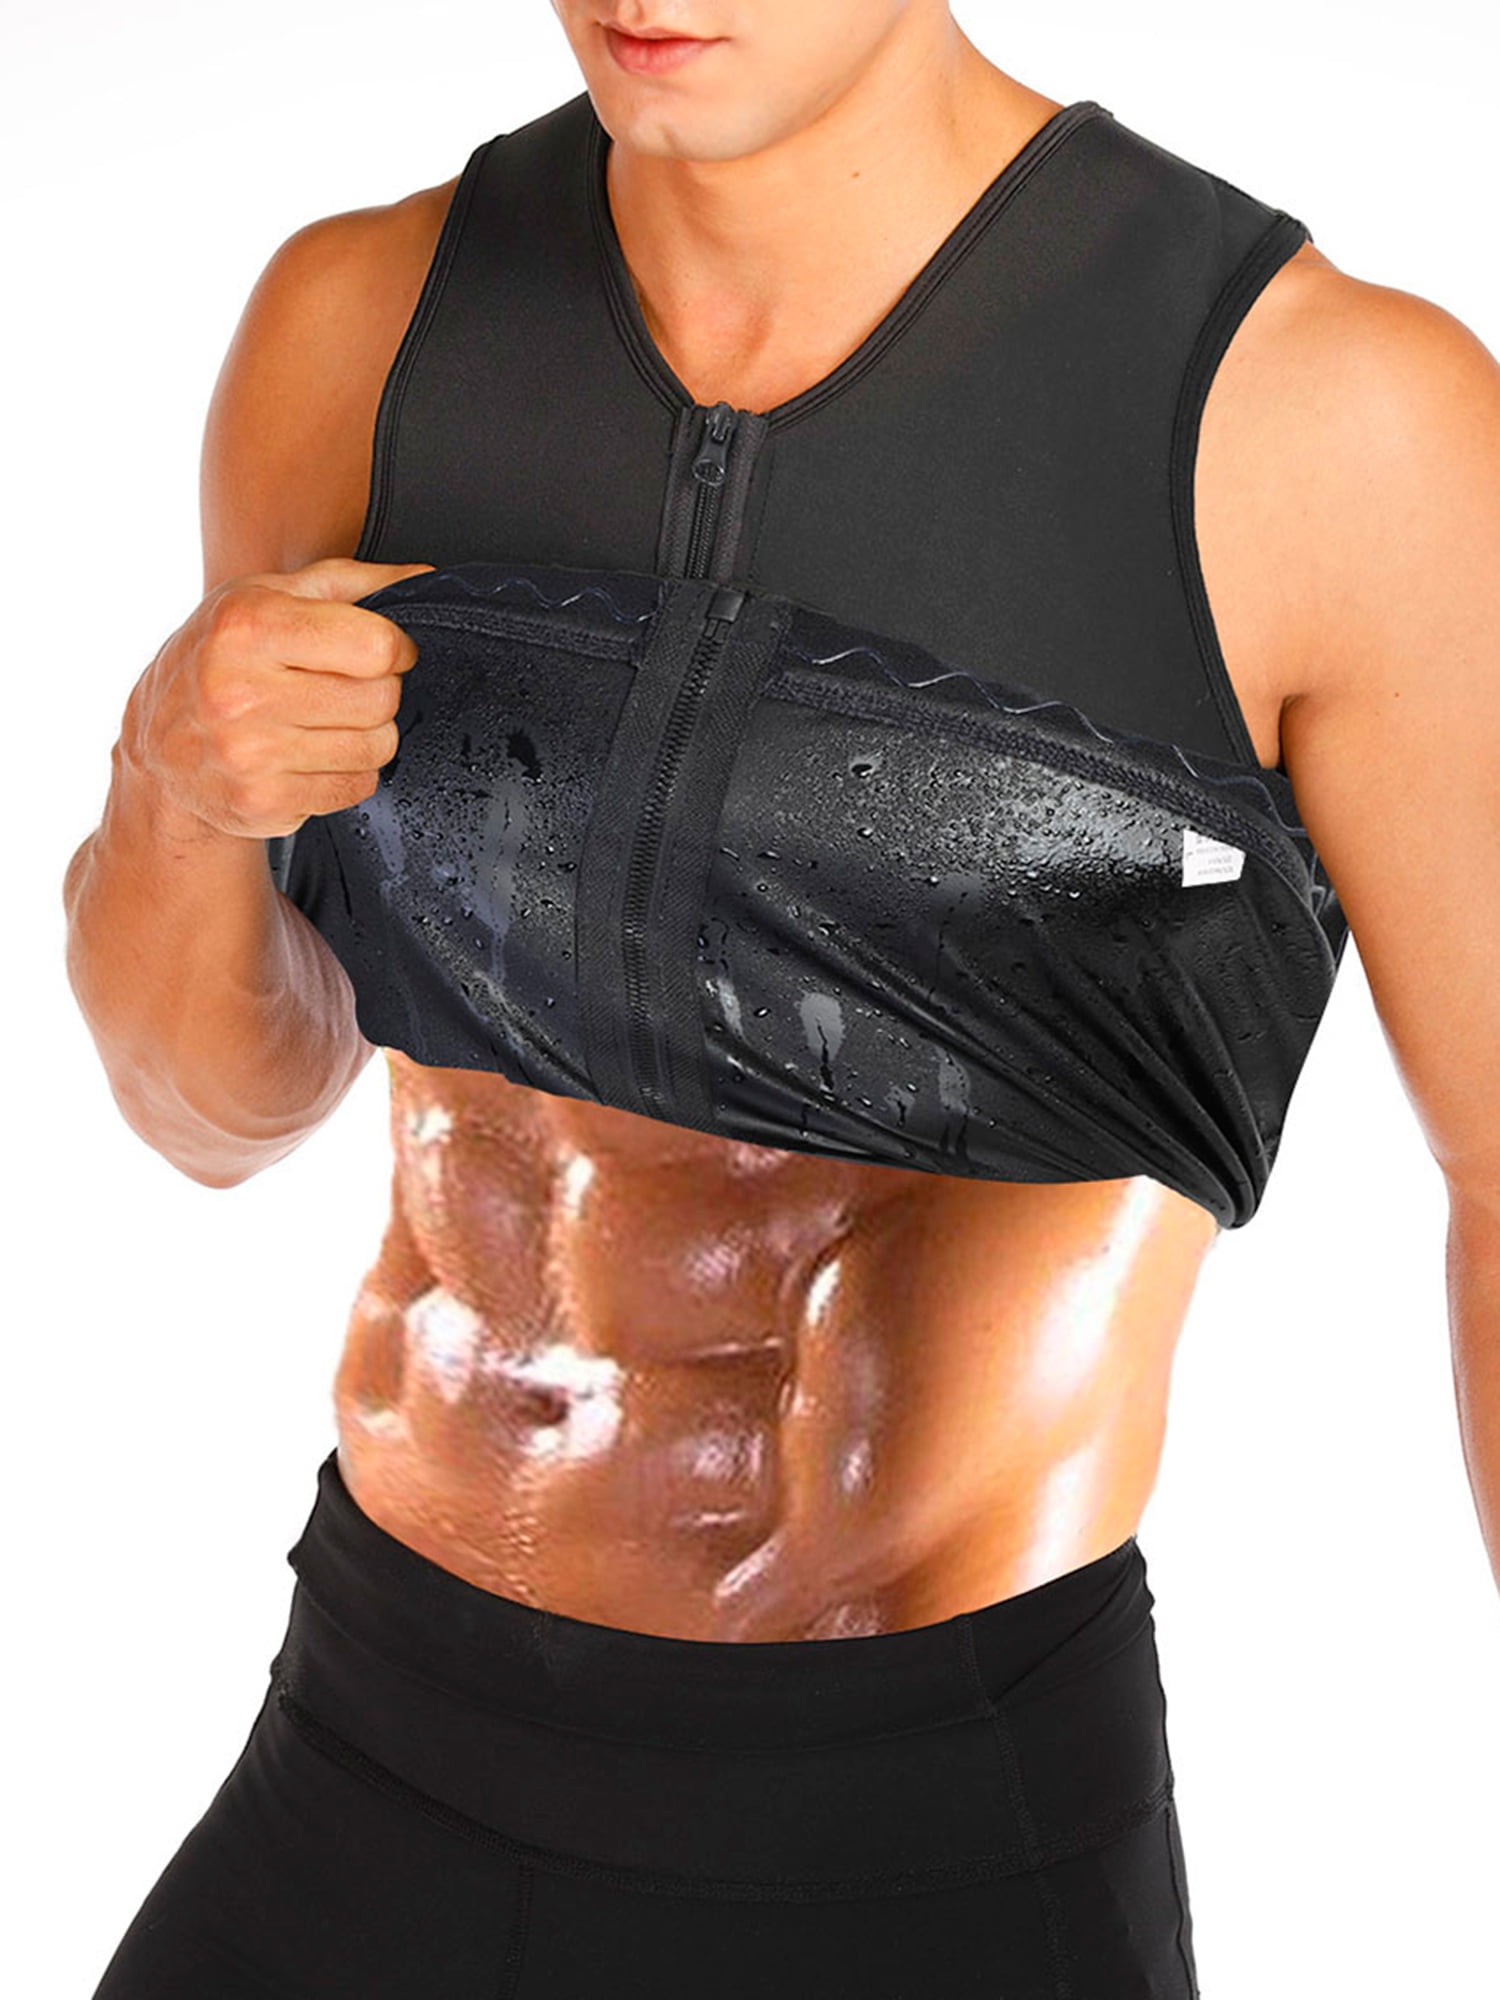 Mens Sauna Workout Sweat Shirt Build Up Brutal Chest Suit Gym Body Shaper Top US 